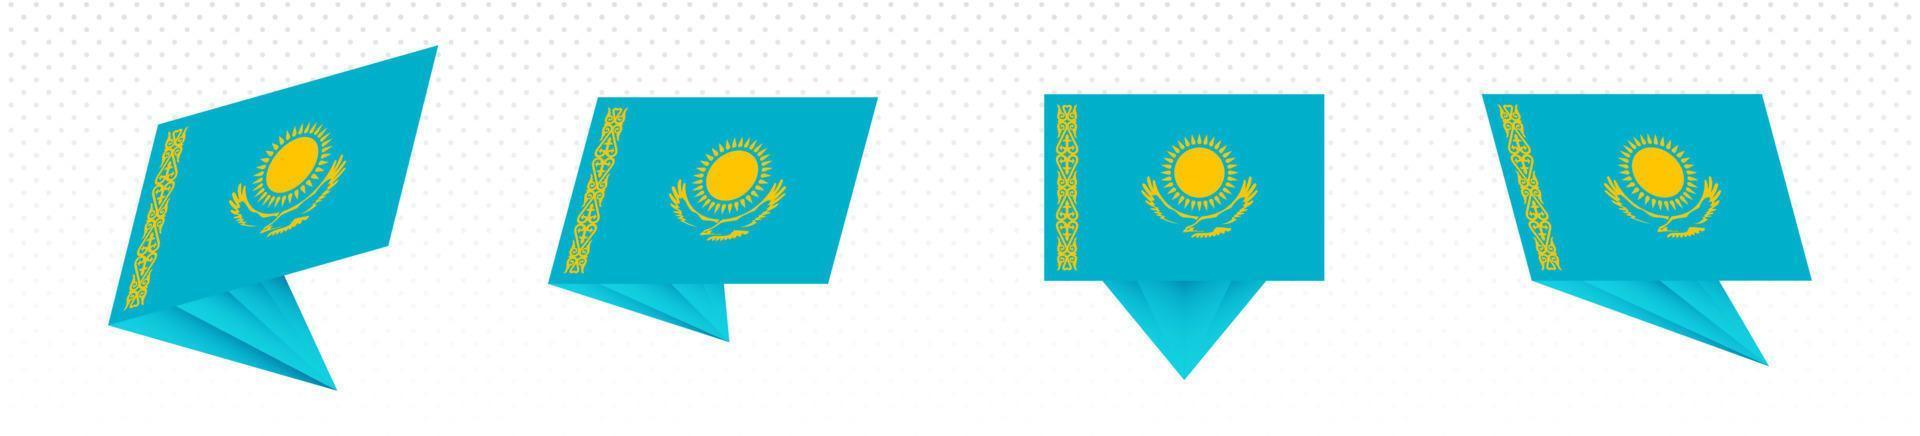 vlag van Kazachstan in modern abstract ontwerp, vlag set. vector